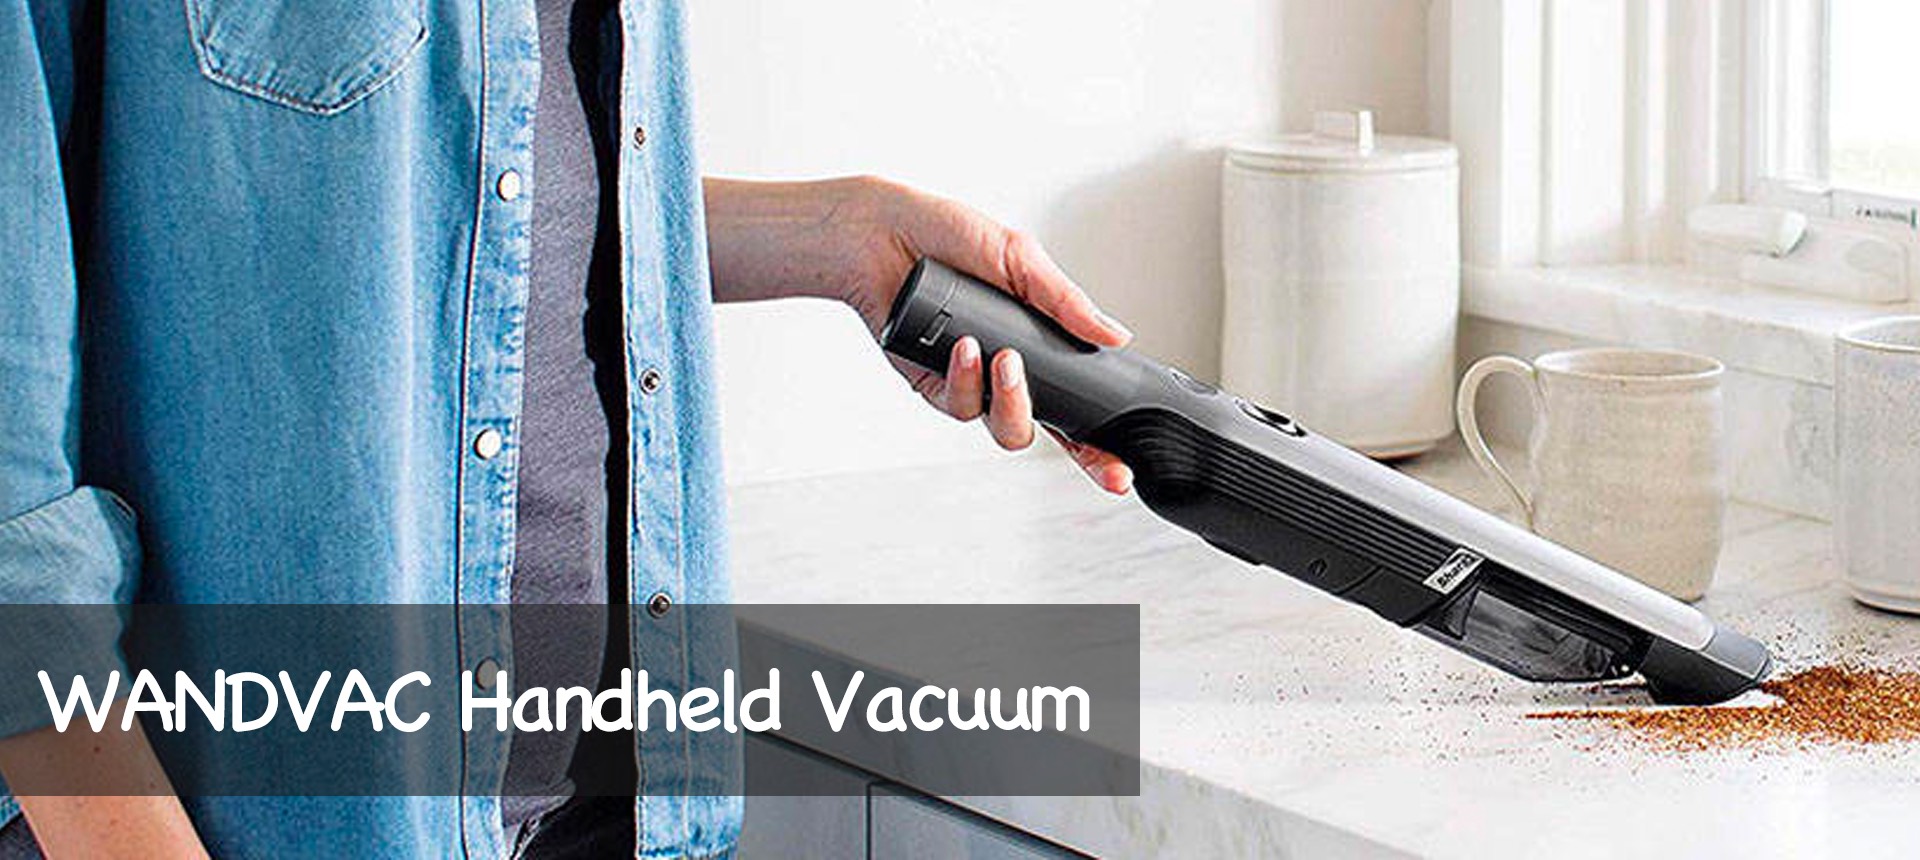 WANDVAC Handheld Vacuum